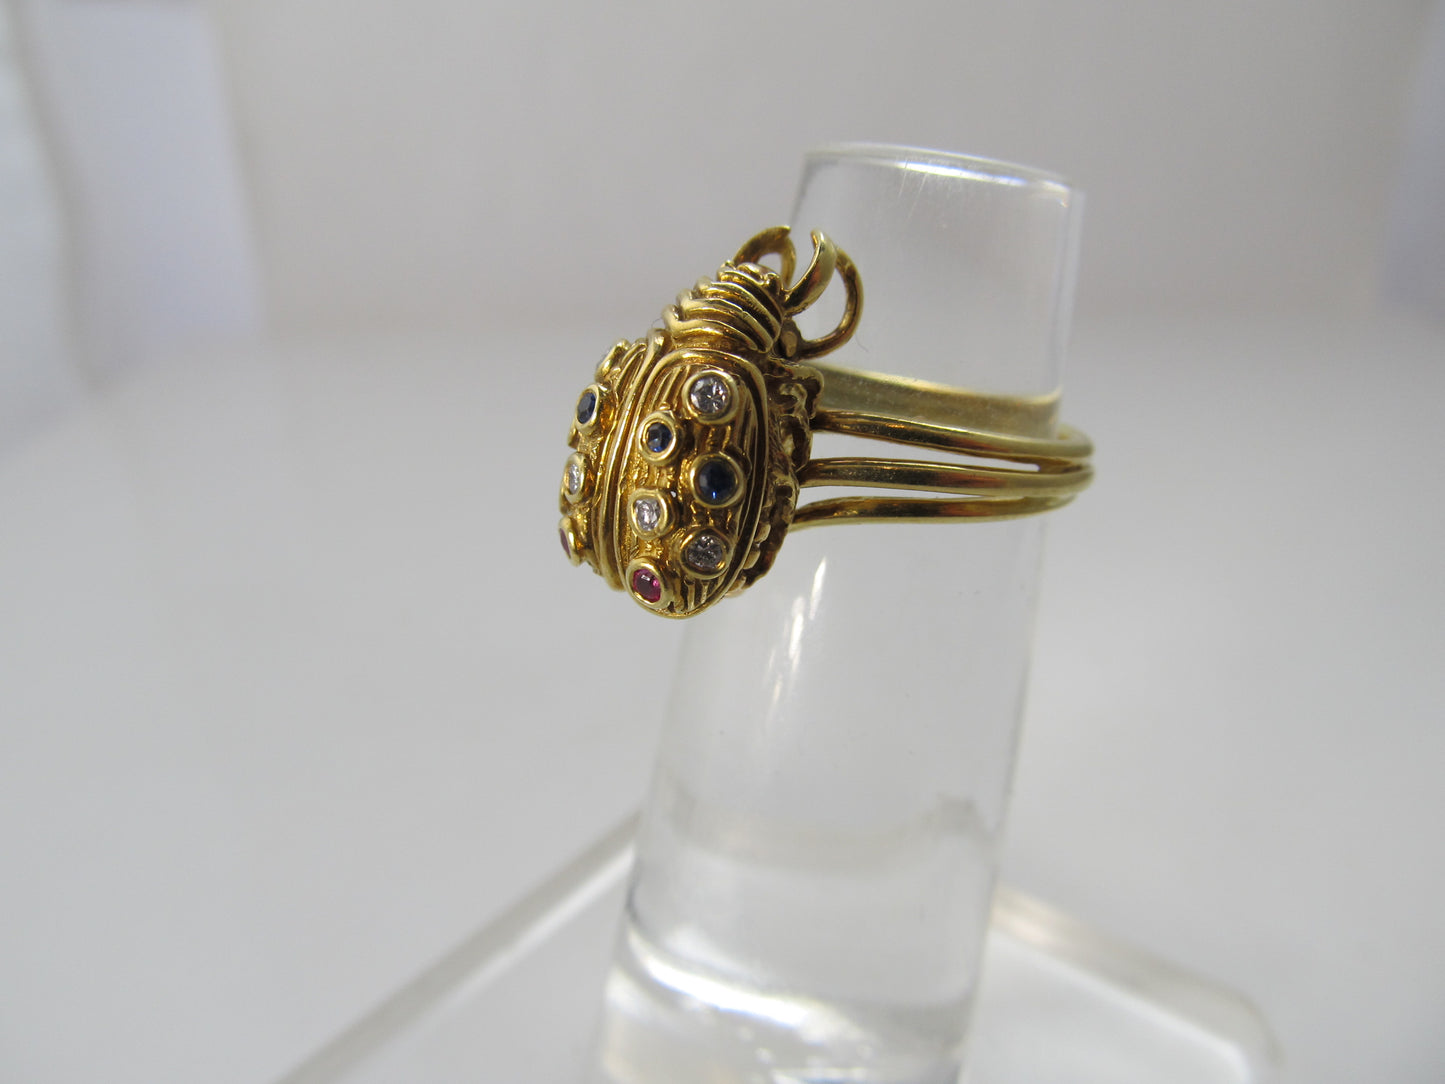 Neat vintage lady bug ring